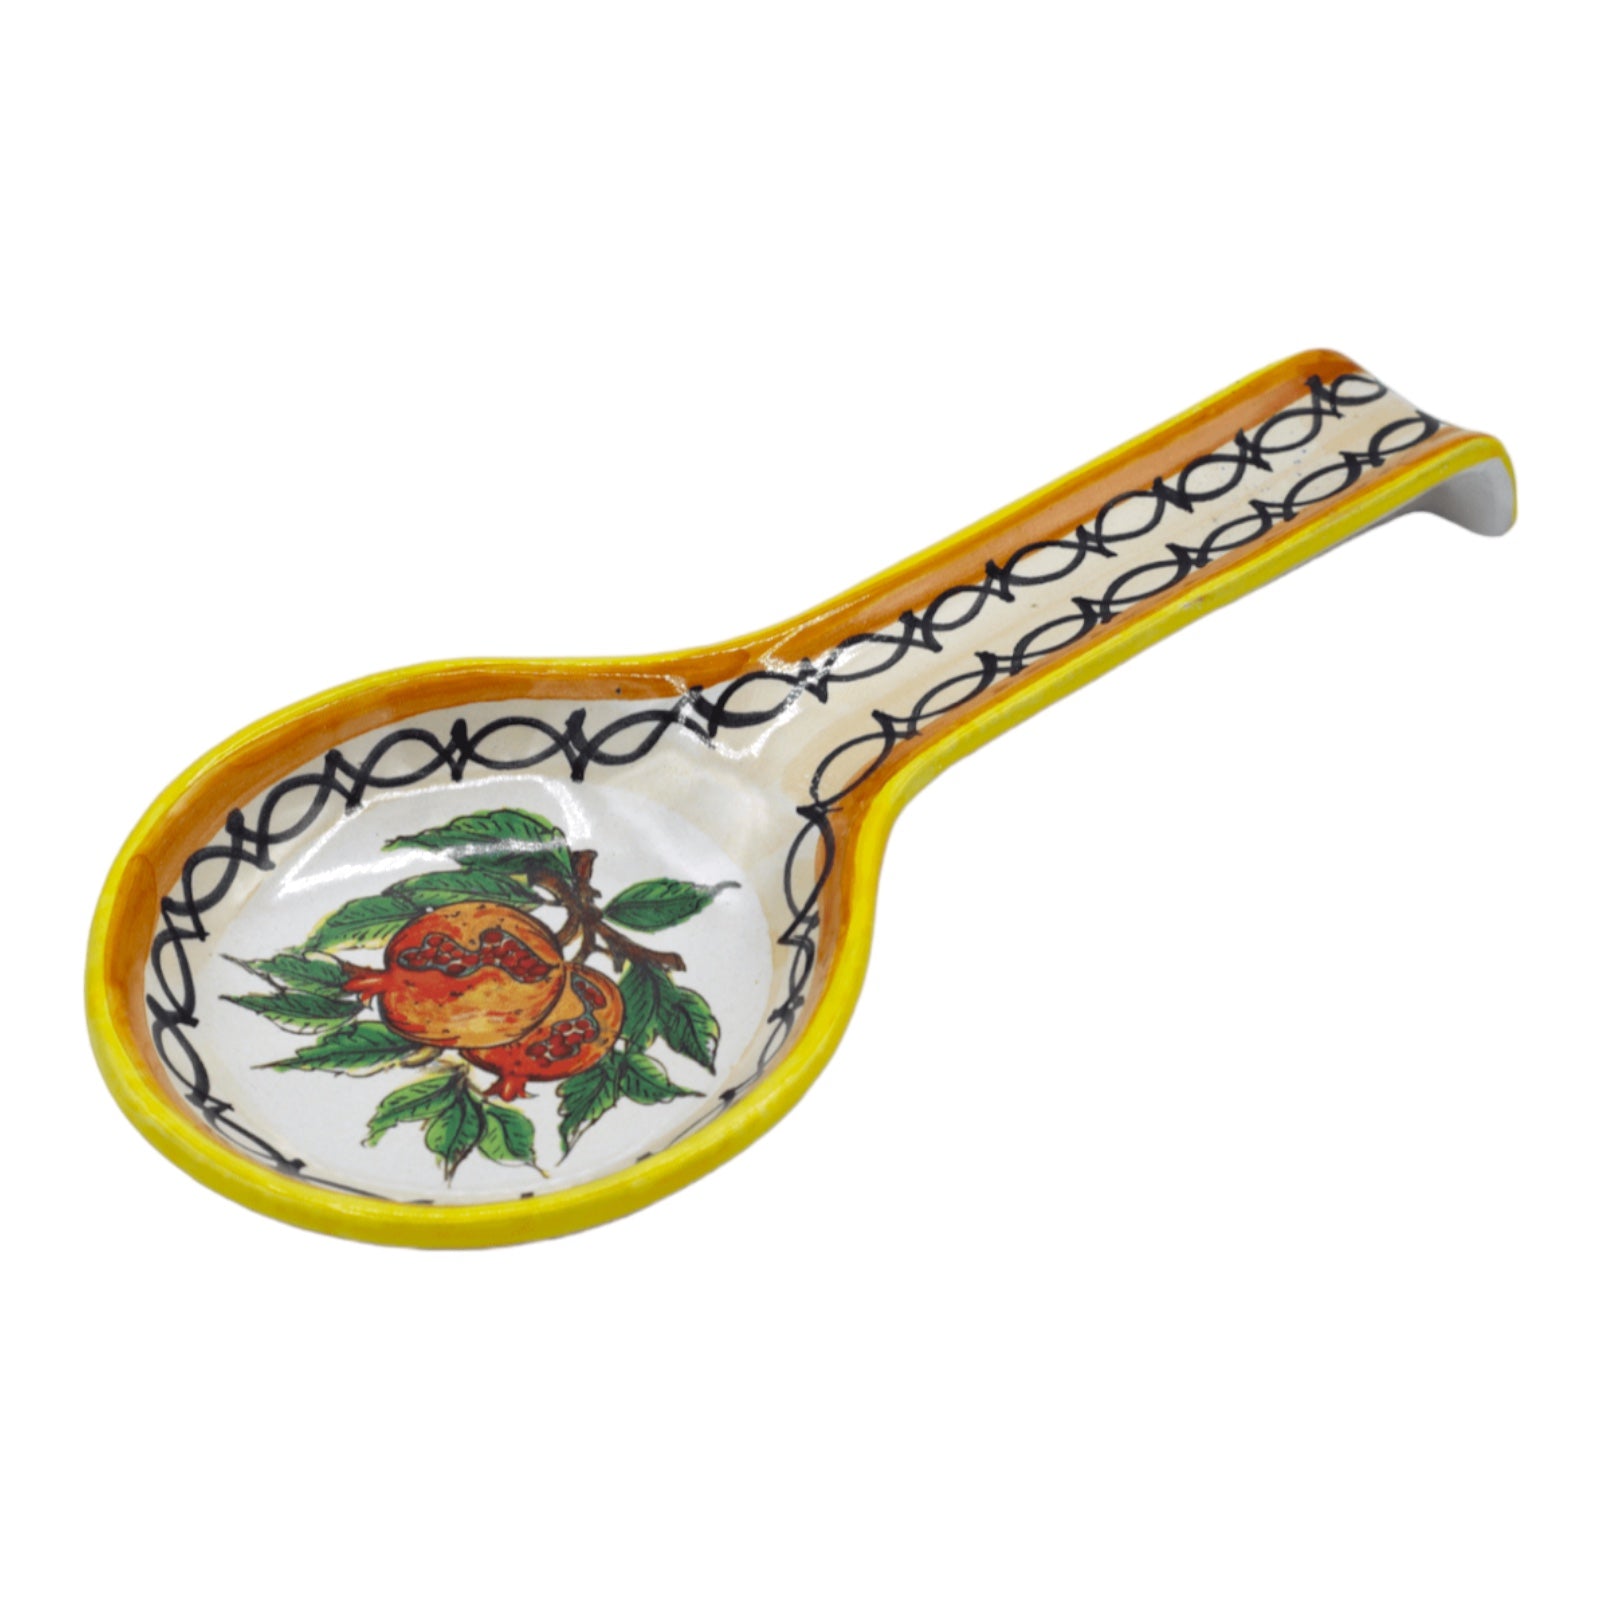 Spoon rest in Fine Ceramic, Pomegranate, l 27 x 12 cm approx.